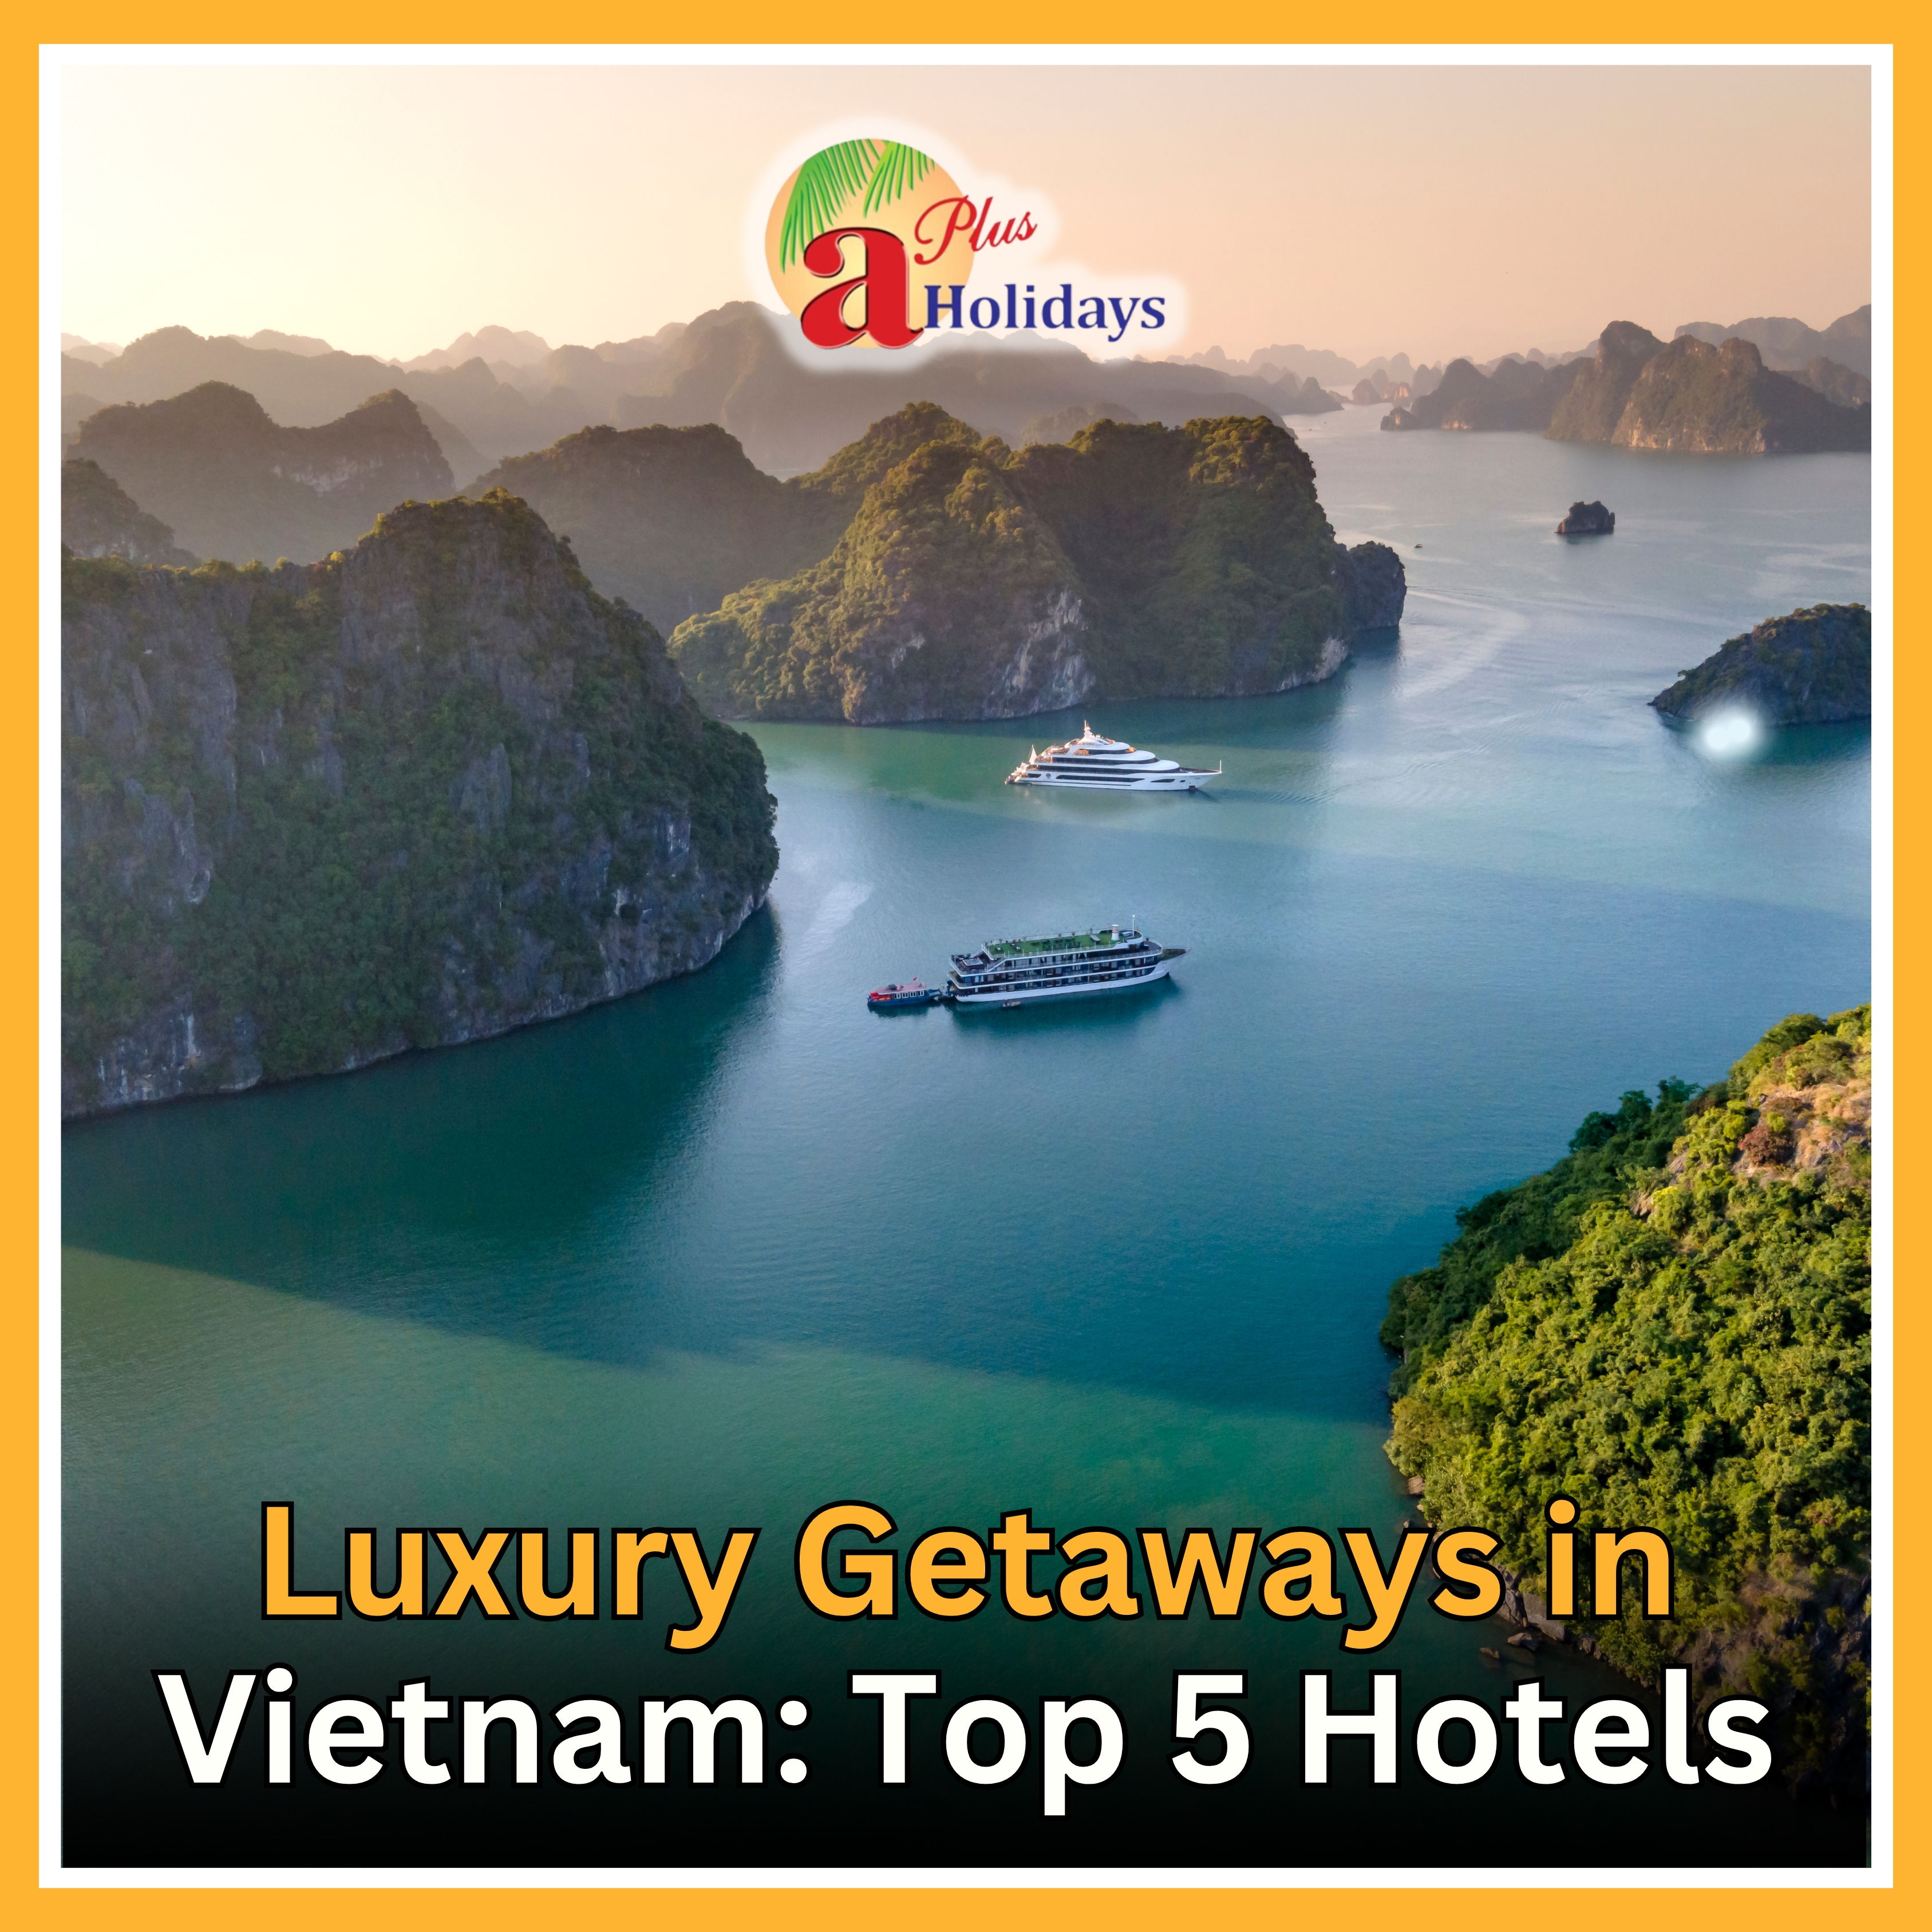 vietnam hotel booking agents in delhi